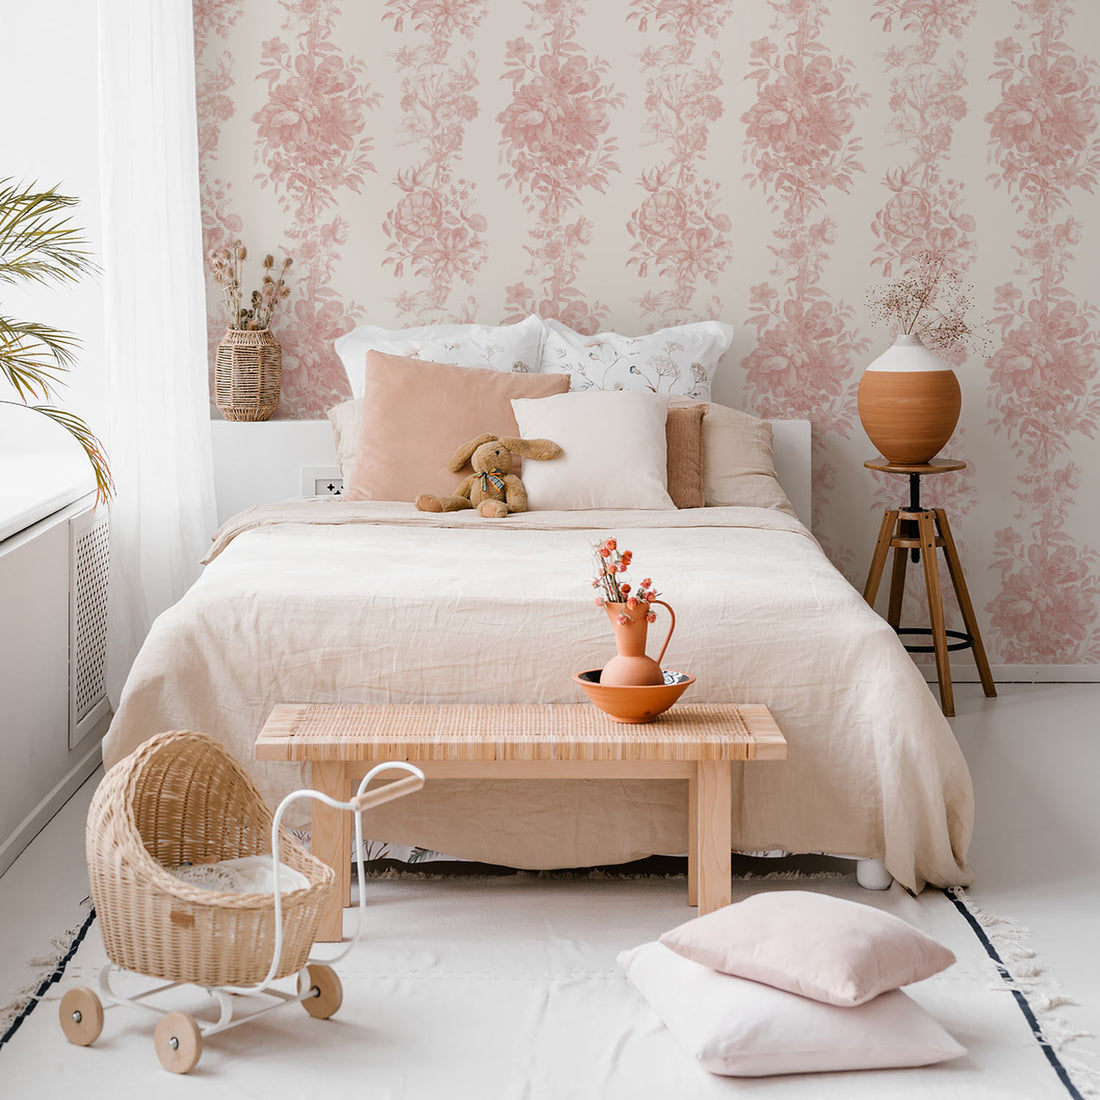 modern bohemian girls bedroom interior with light pink vintage florals inspired wallpaper